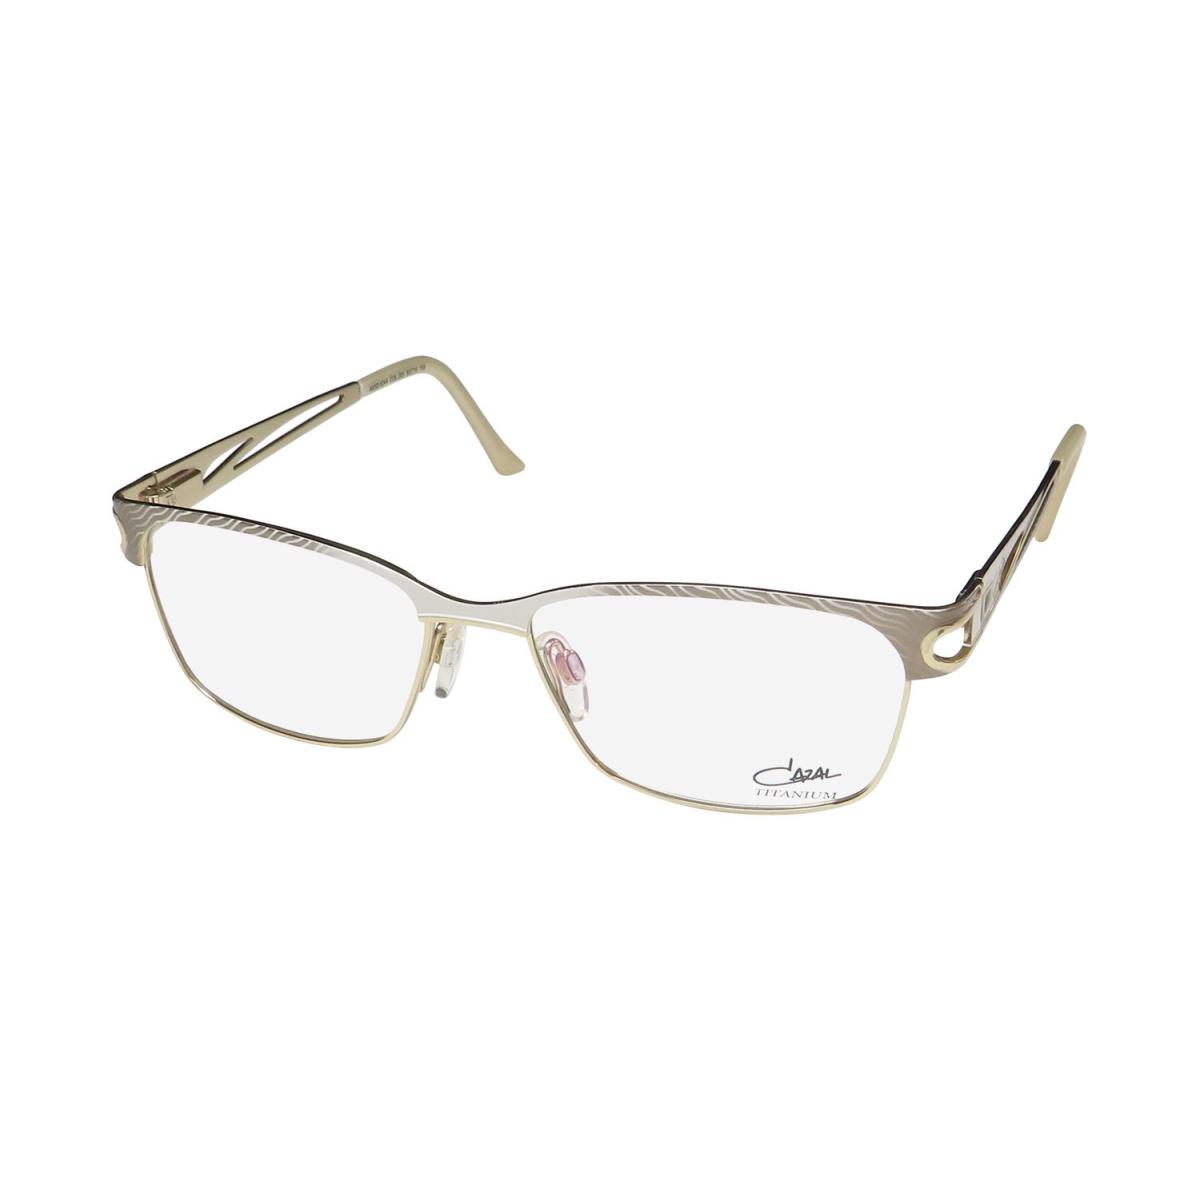 Cazal 4244 Titanium Made IN Germany Full-rim Eyeglass Frame/eyewear Ivory / Silver